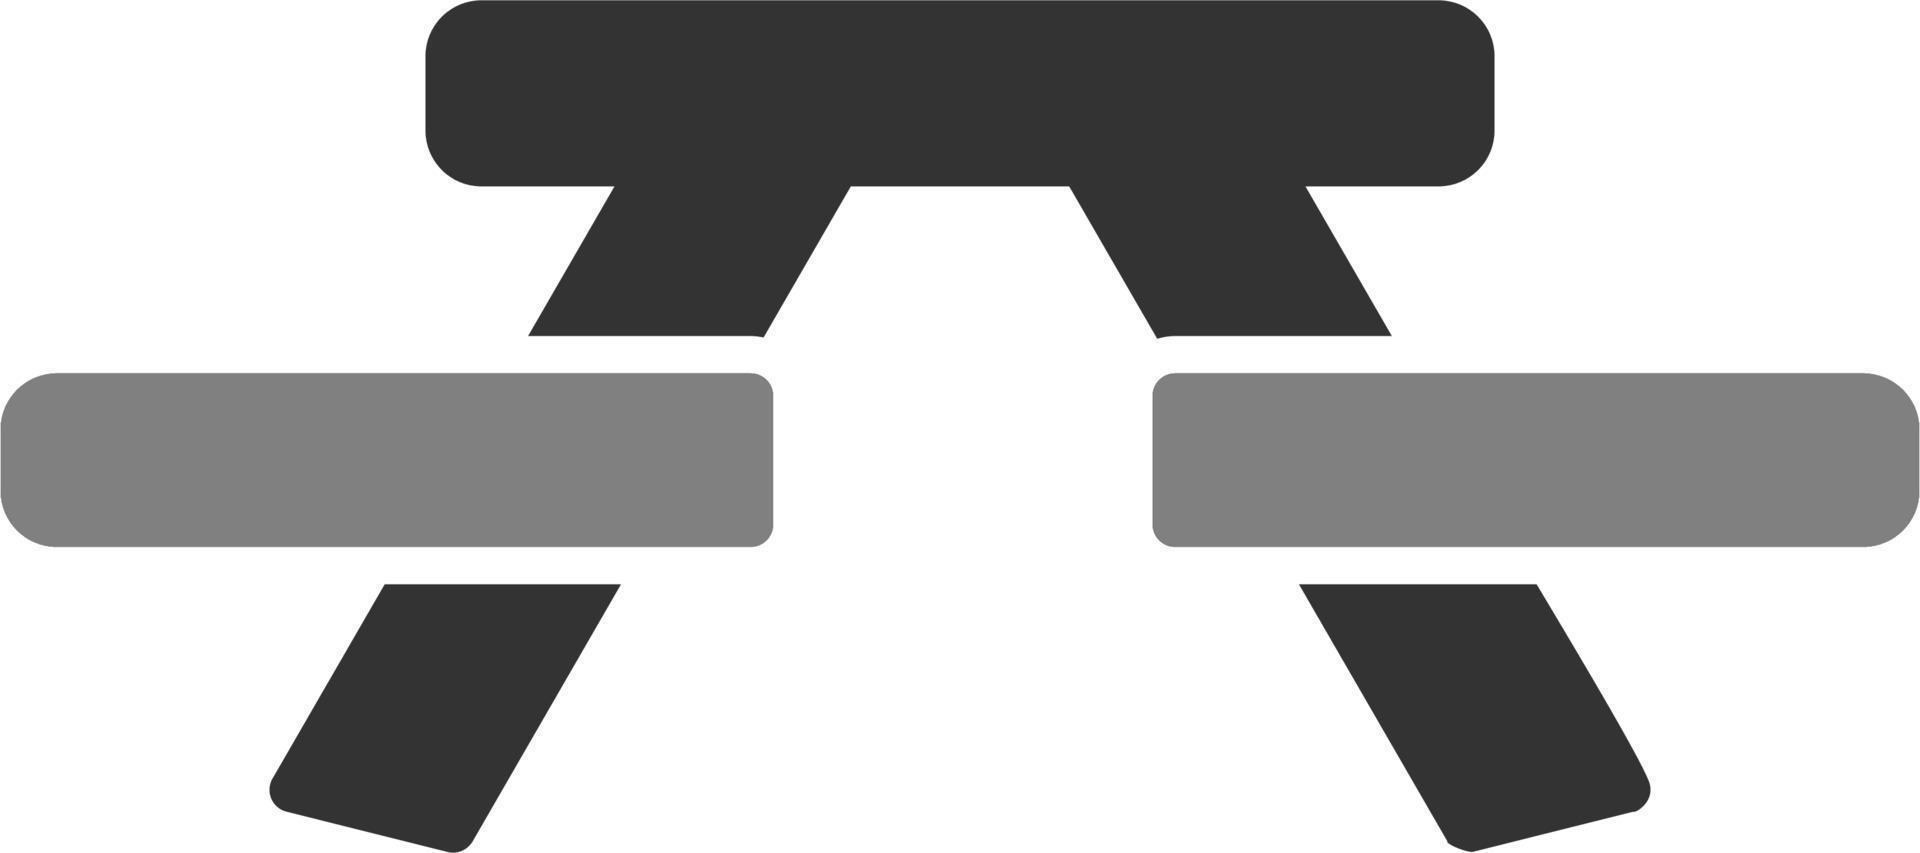 picknick tabell vektor ikon